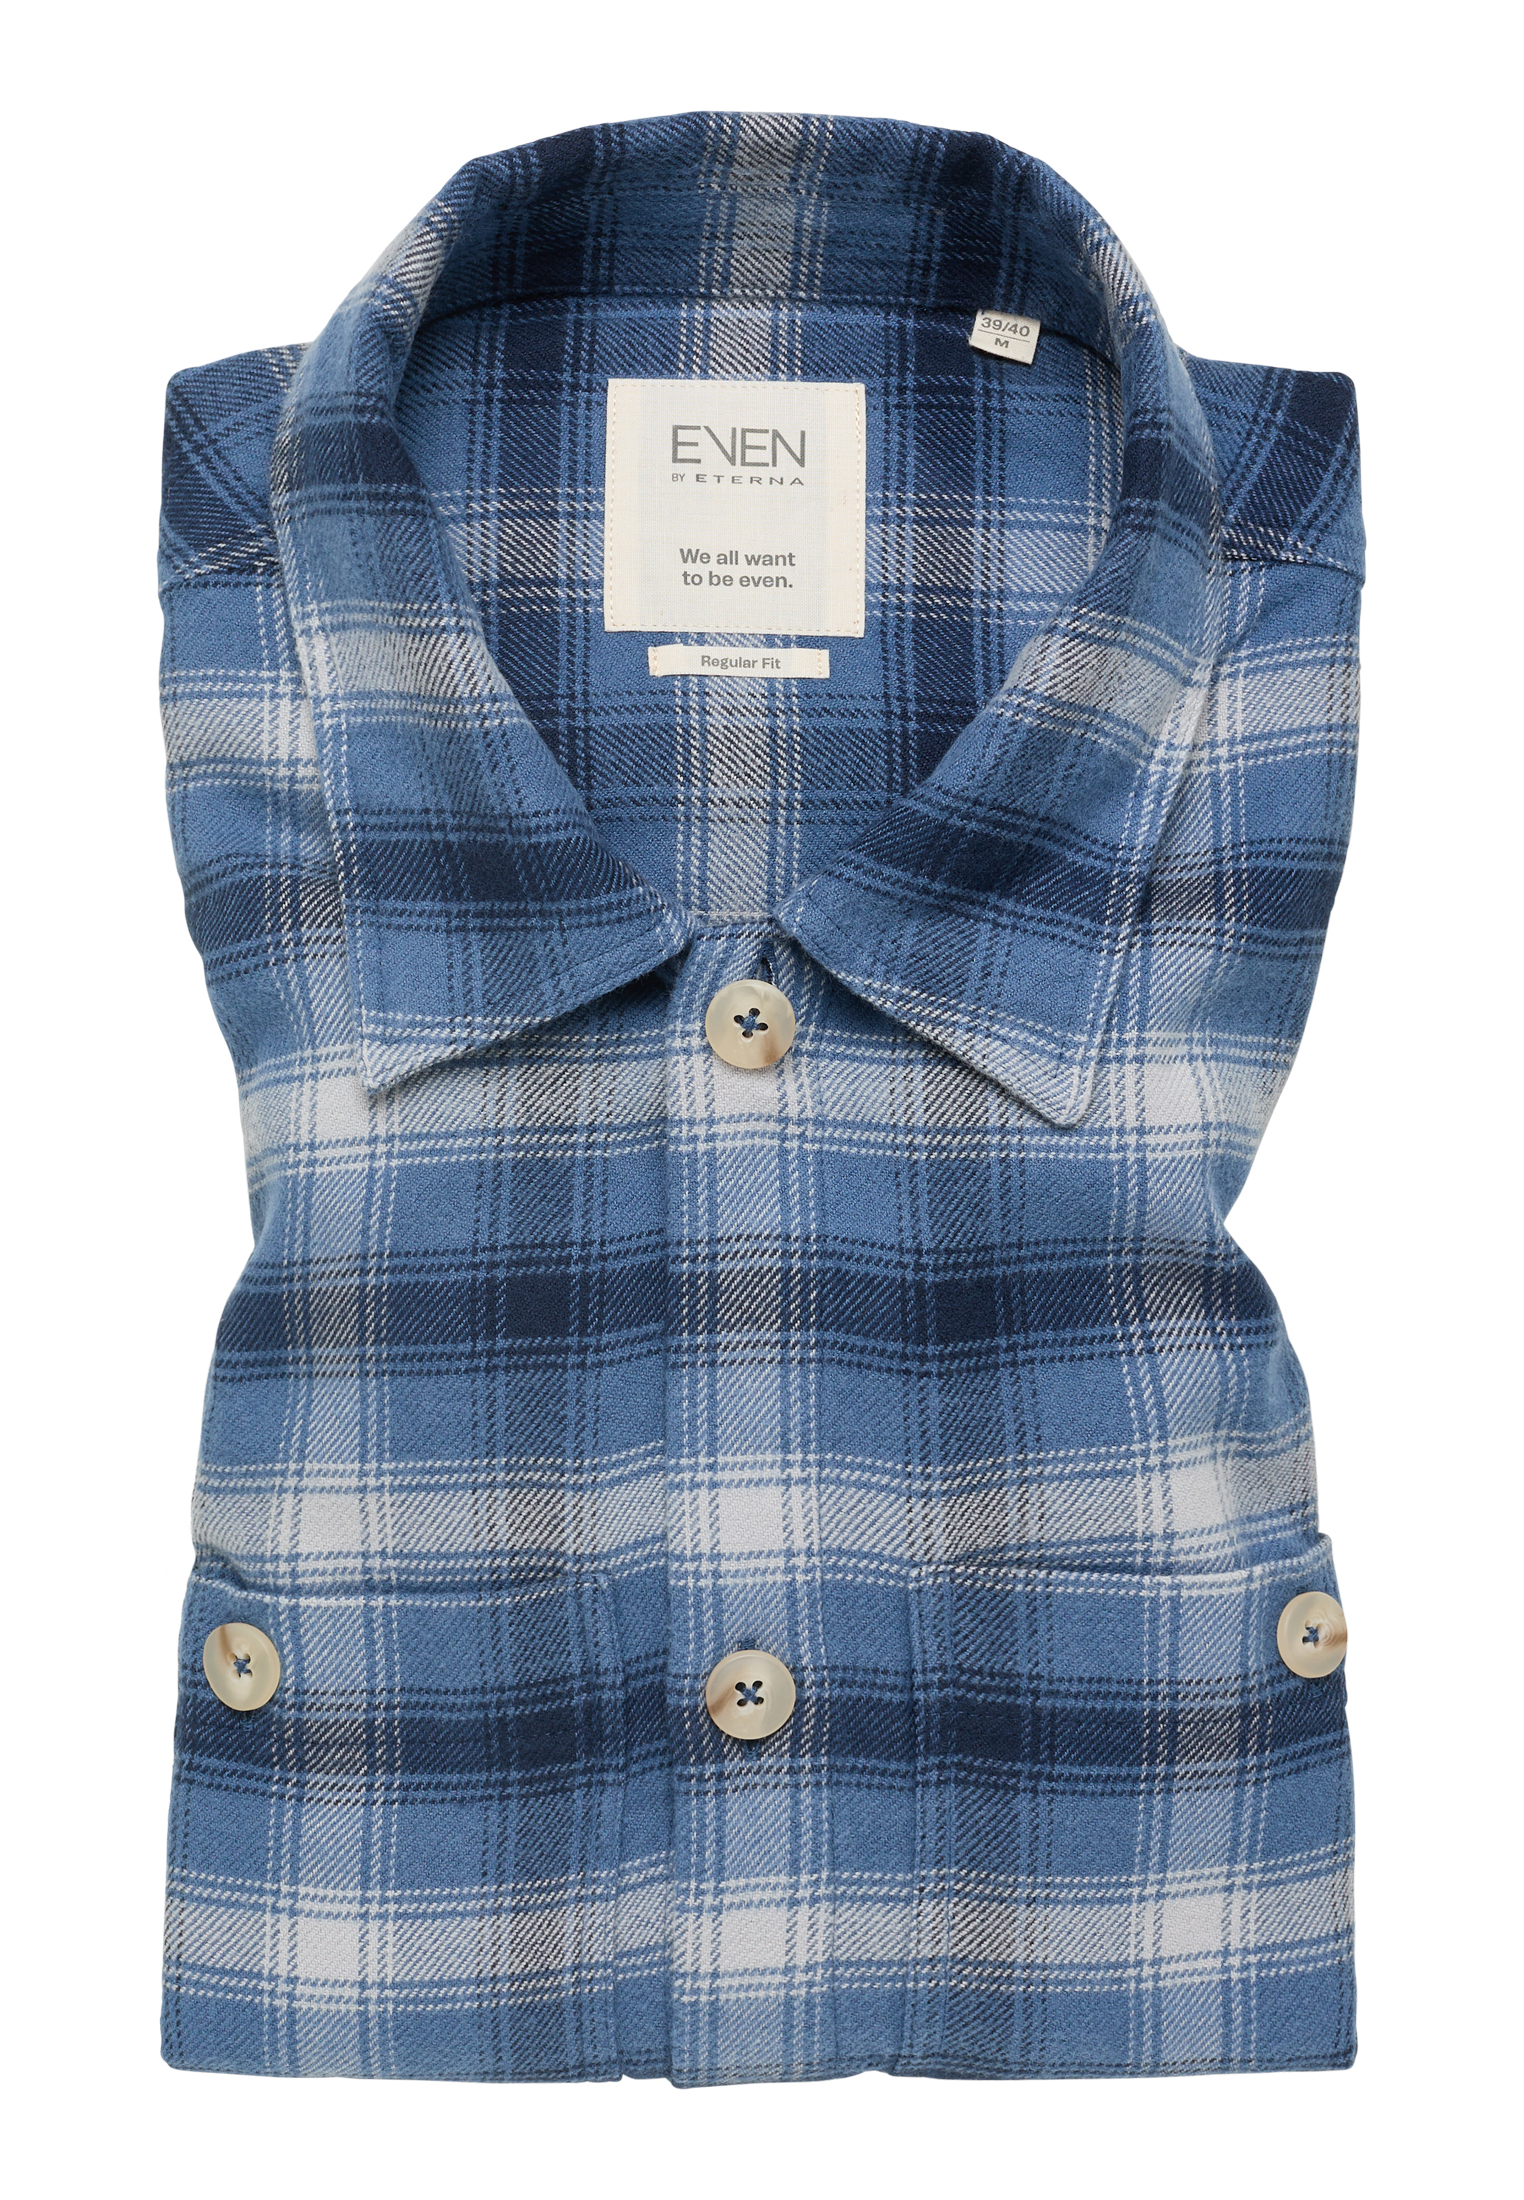 MODERN FIT Shirt in | M long | | checkered blue-gray | sleeve blue-gray 1JA00038-01-63-M-1/1